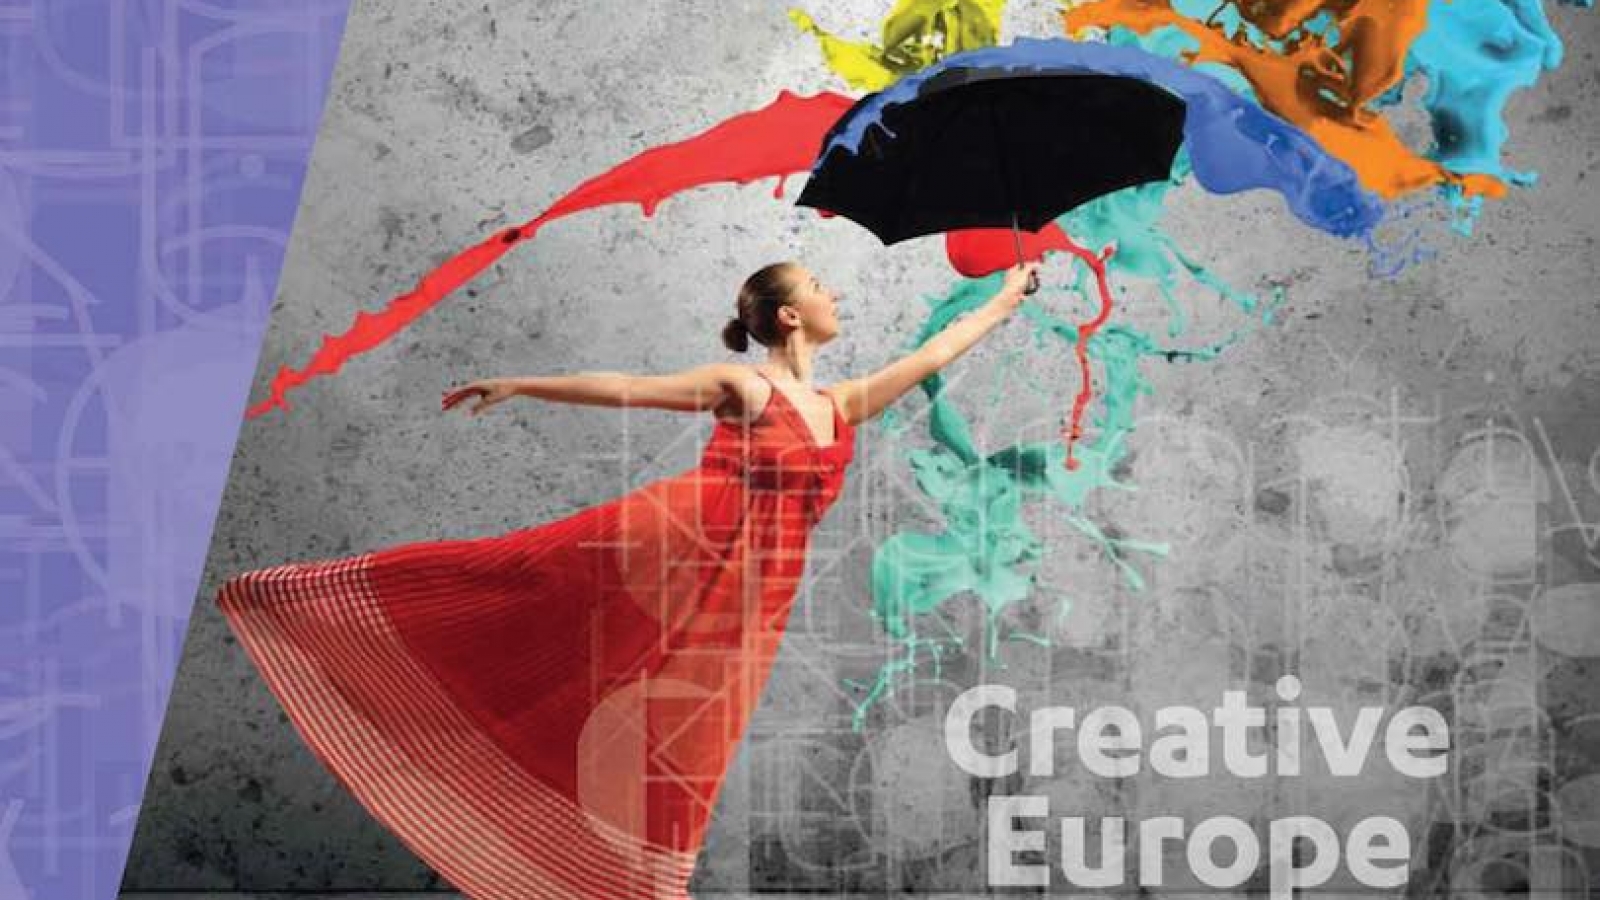 Armenia joins Creative Europe programme